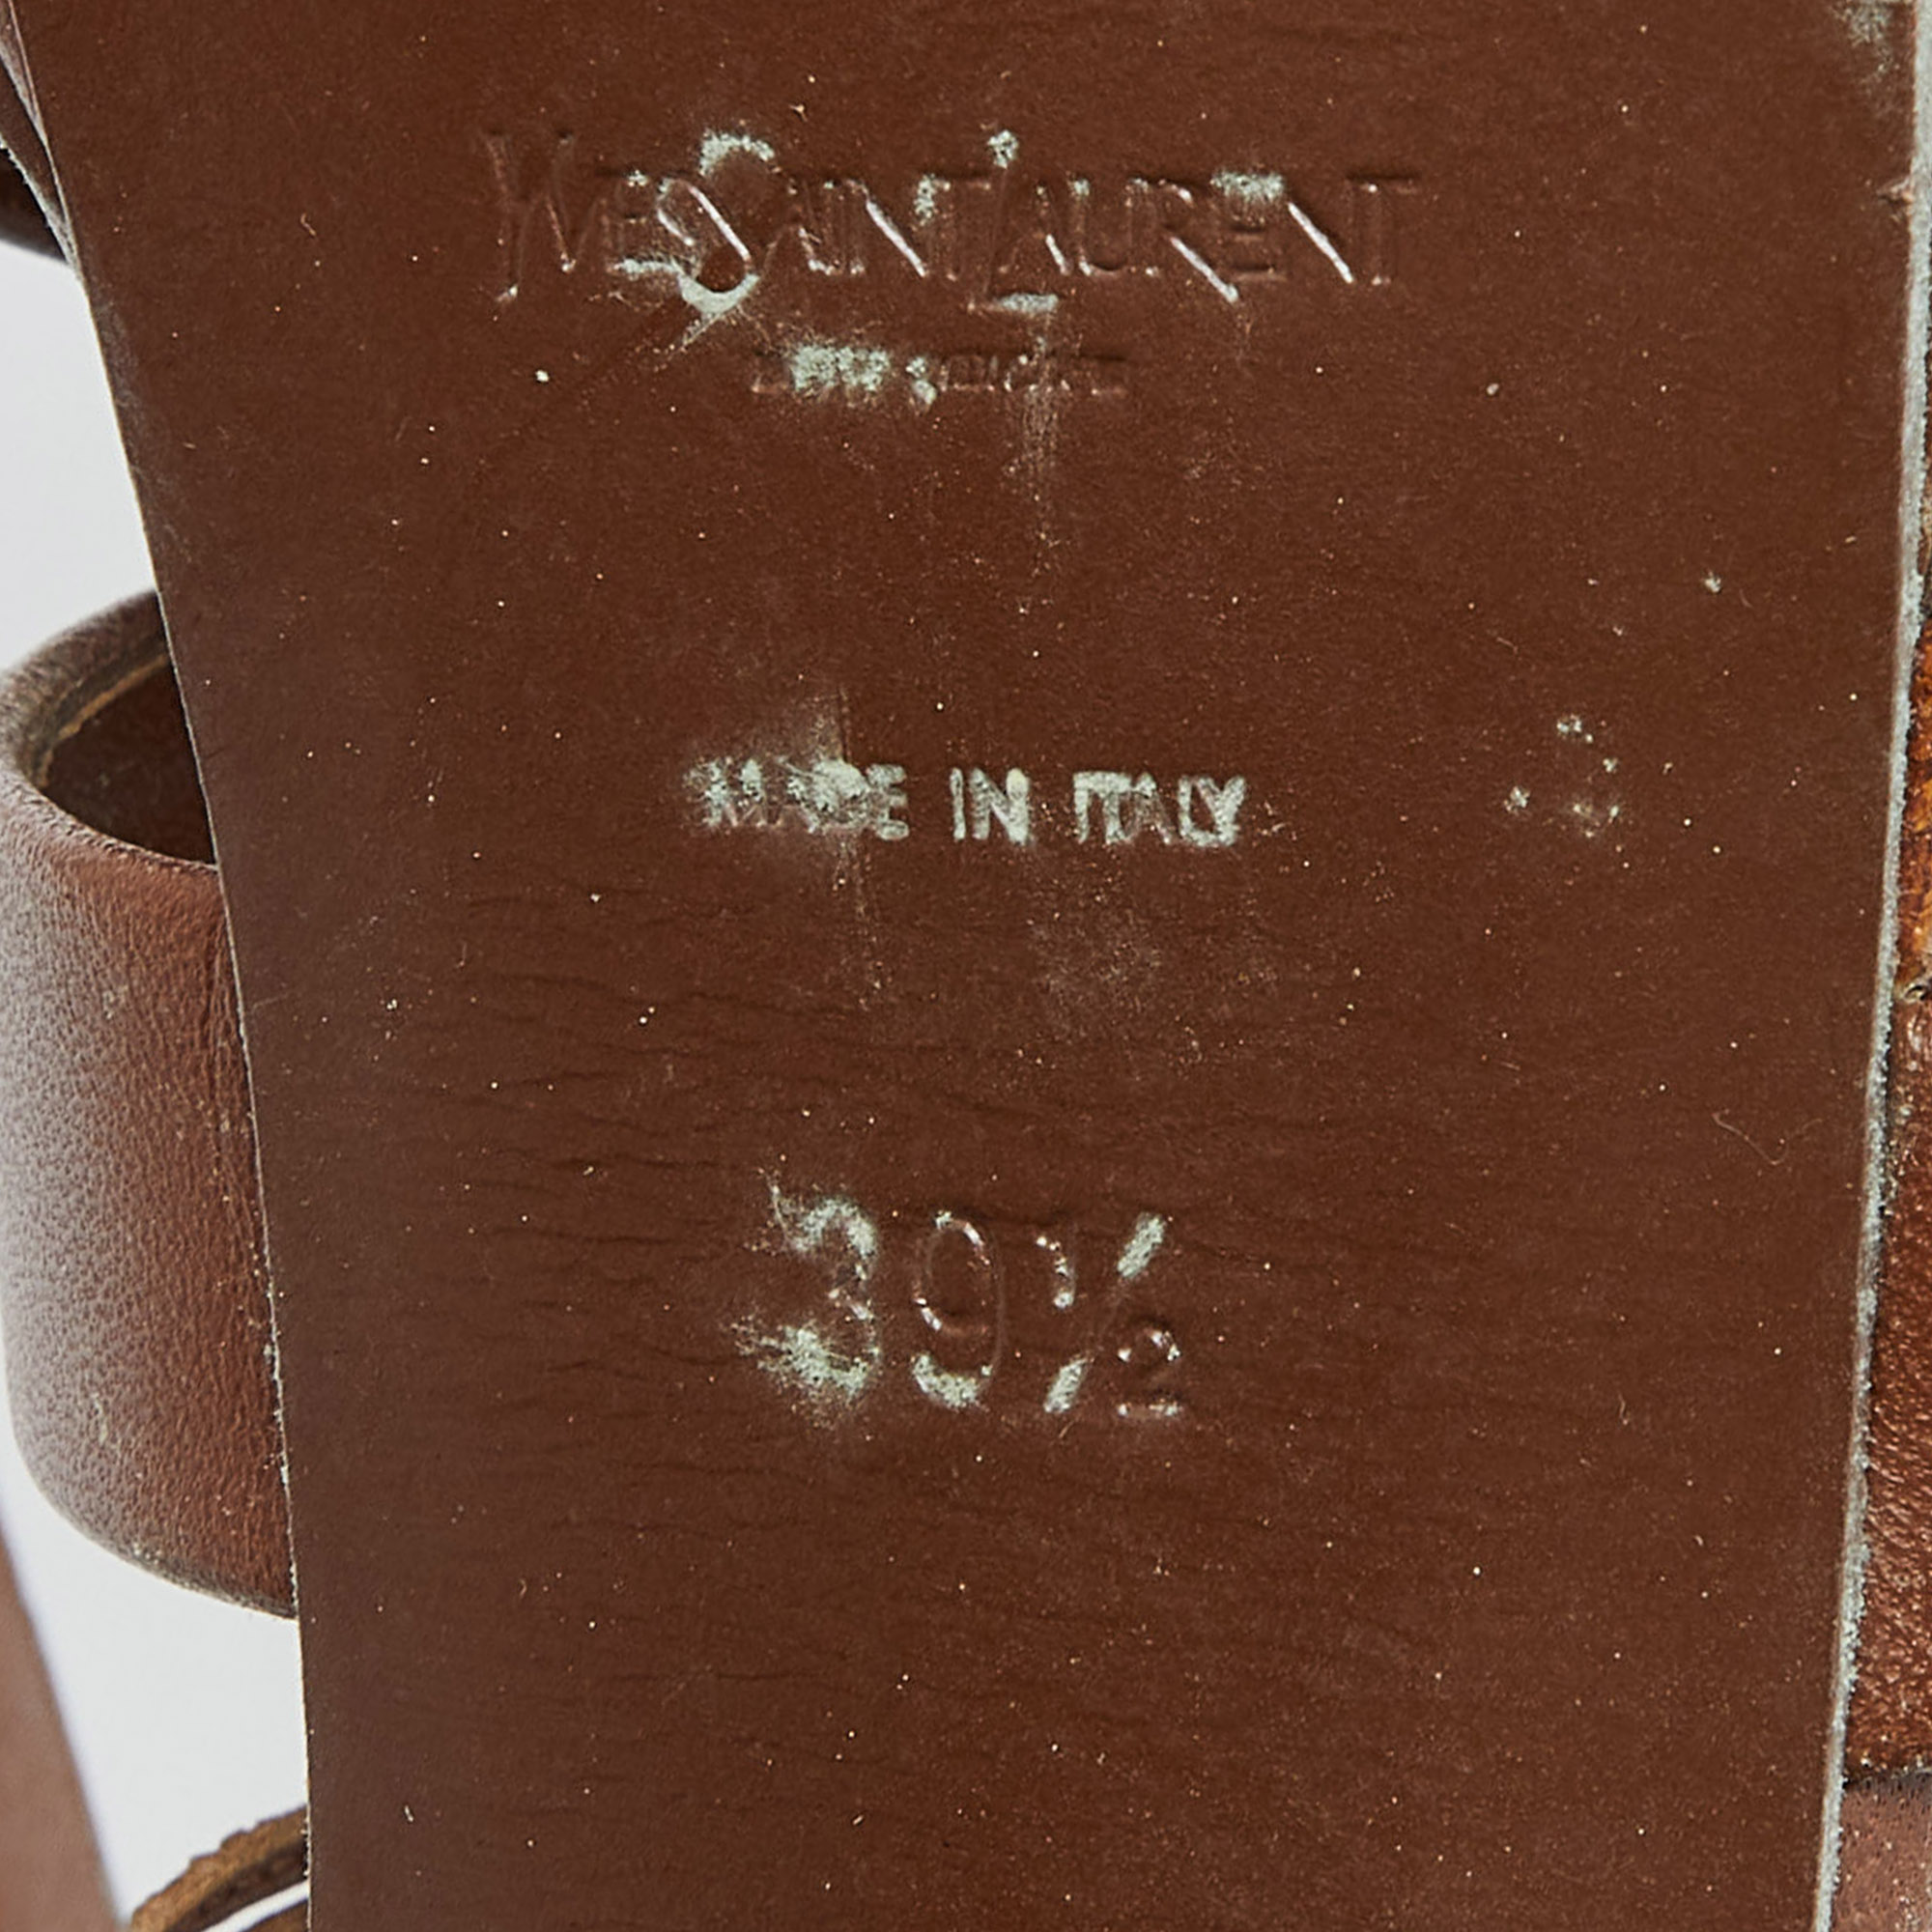 Saint Laurent Brown Leather Strappy Platform Sandals Size 39.5